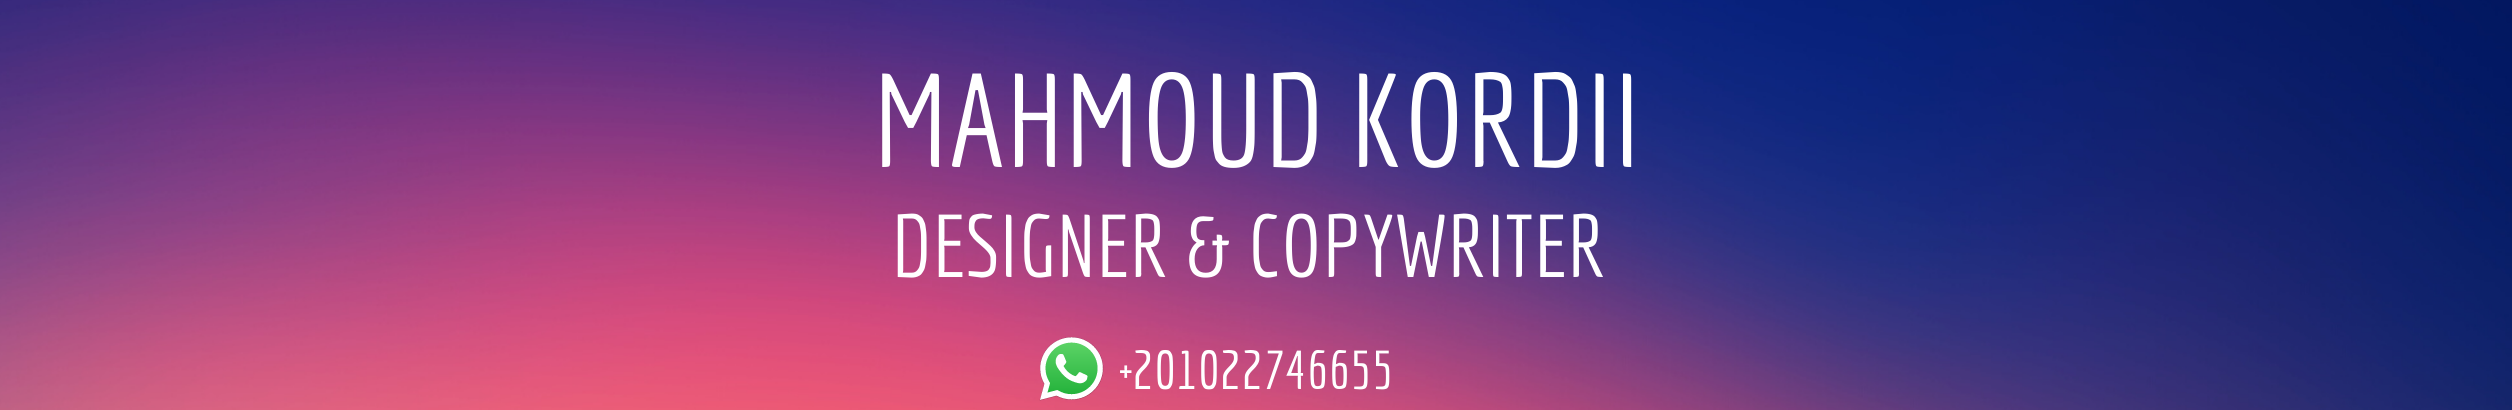 Mahmoud Kordii's profile banner